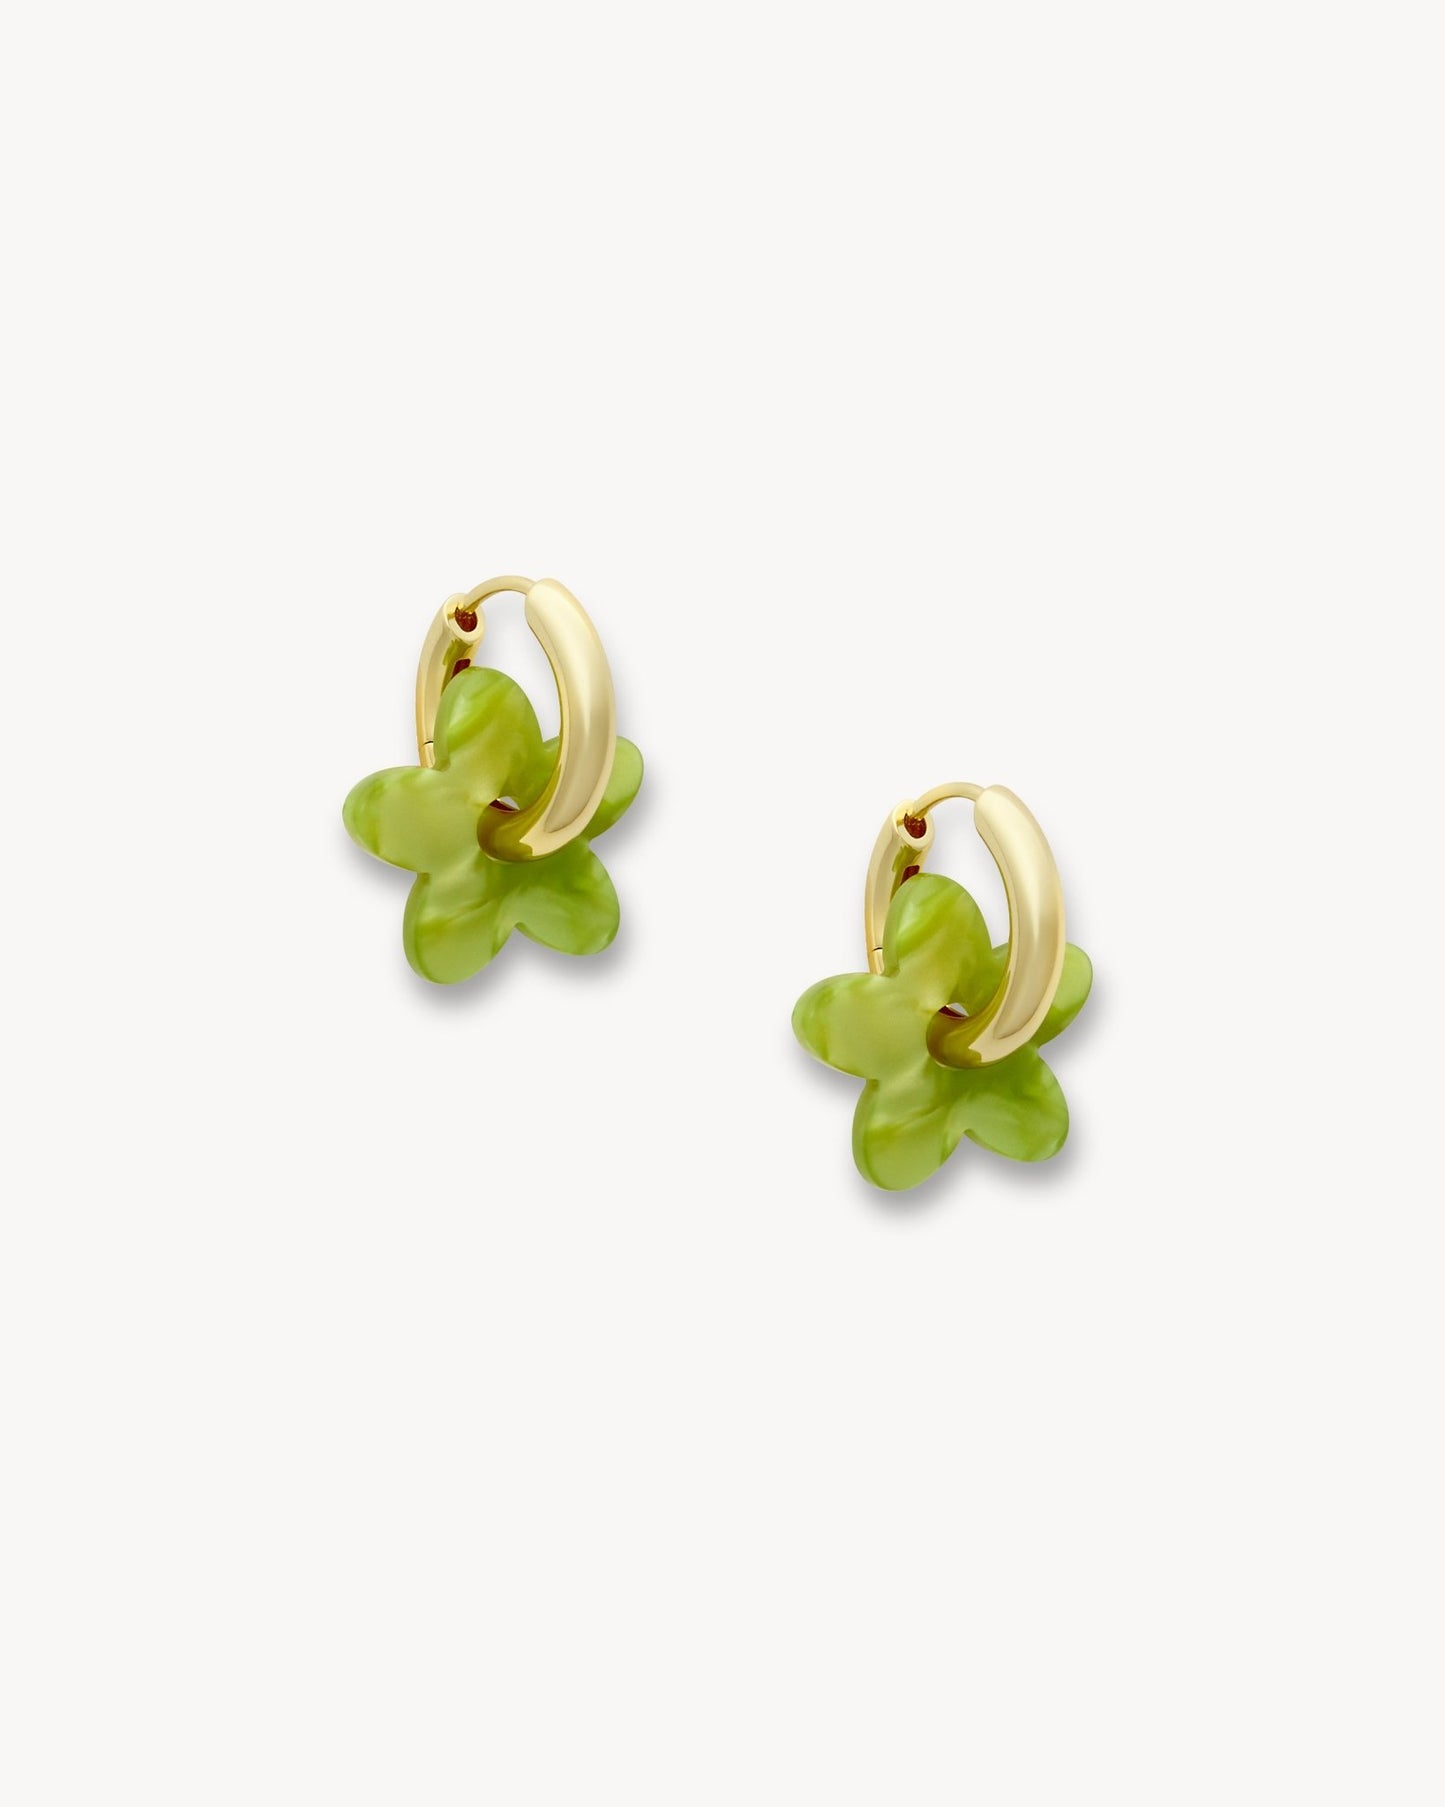 Flower Earring Charms in Pistachio